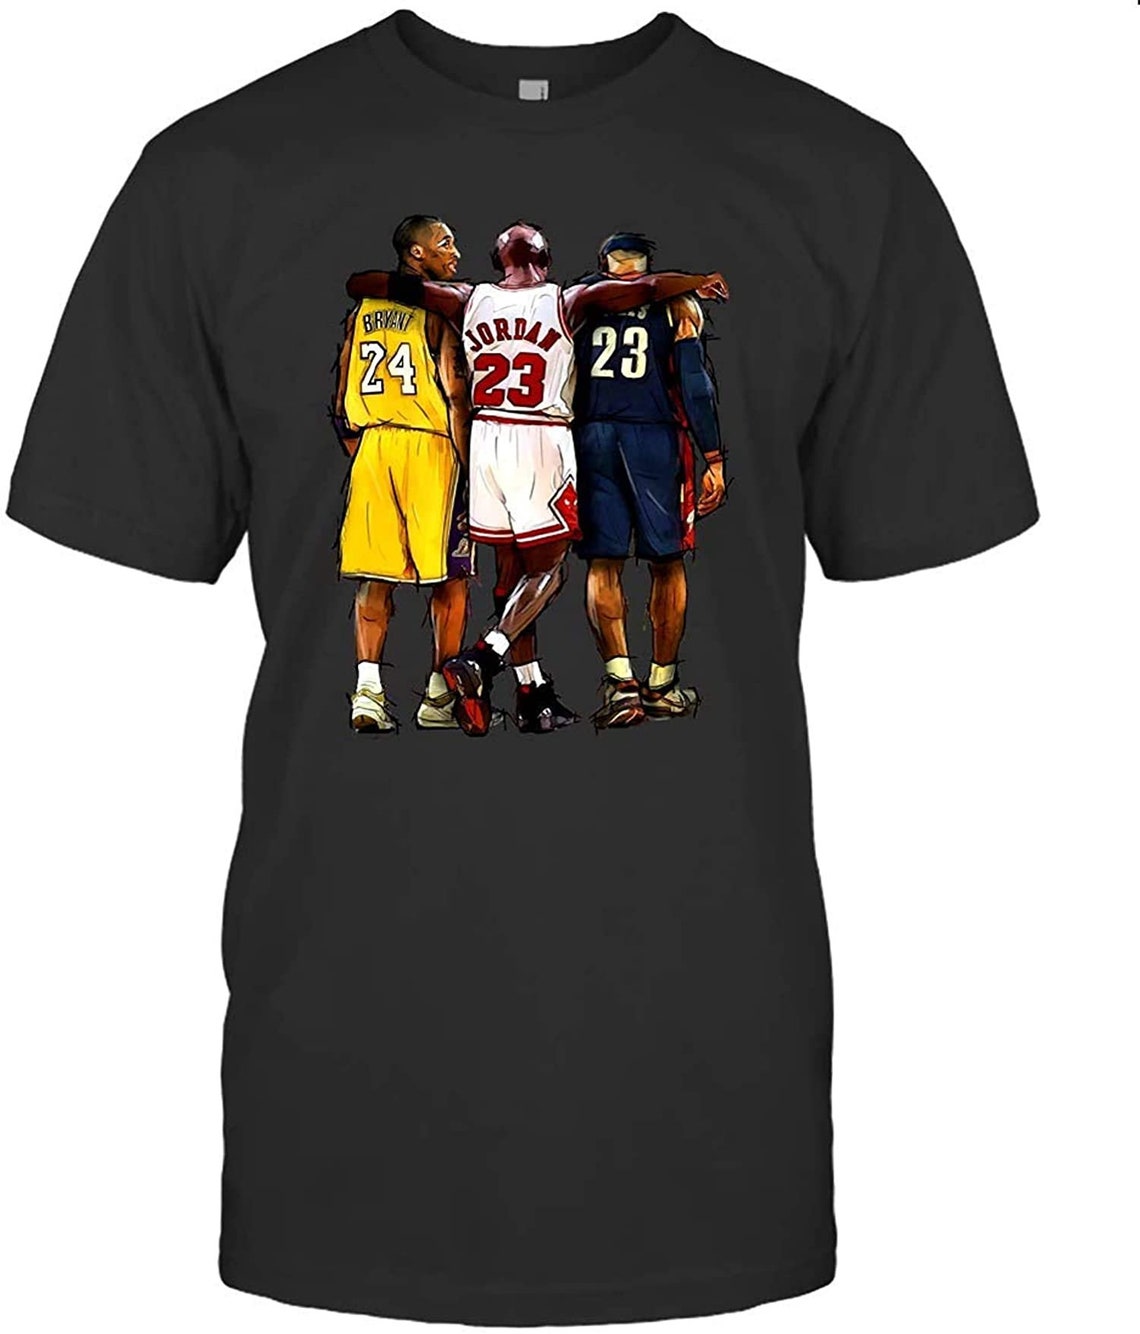 T-Shirt to Match Jordan Kobe Michael Lebron Together T Shirt | Etsy